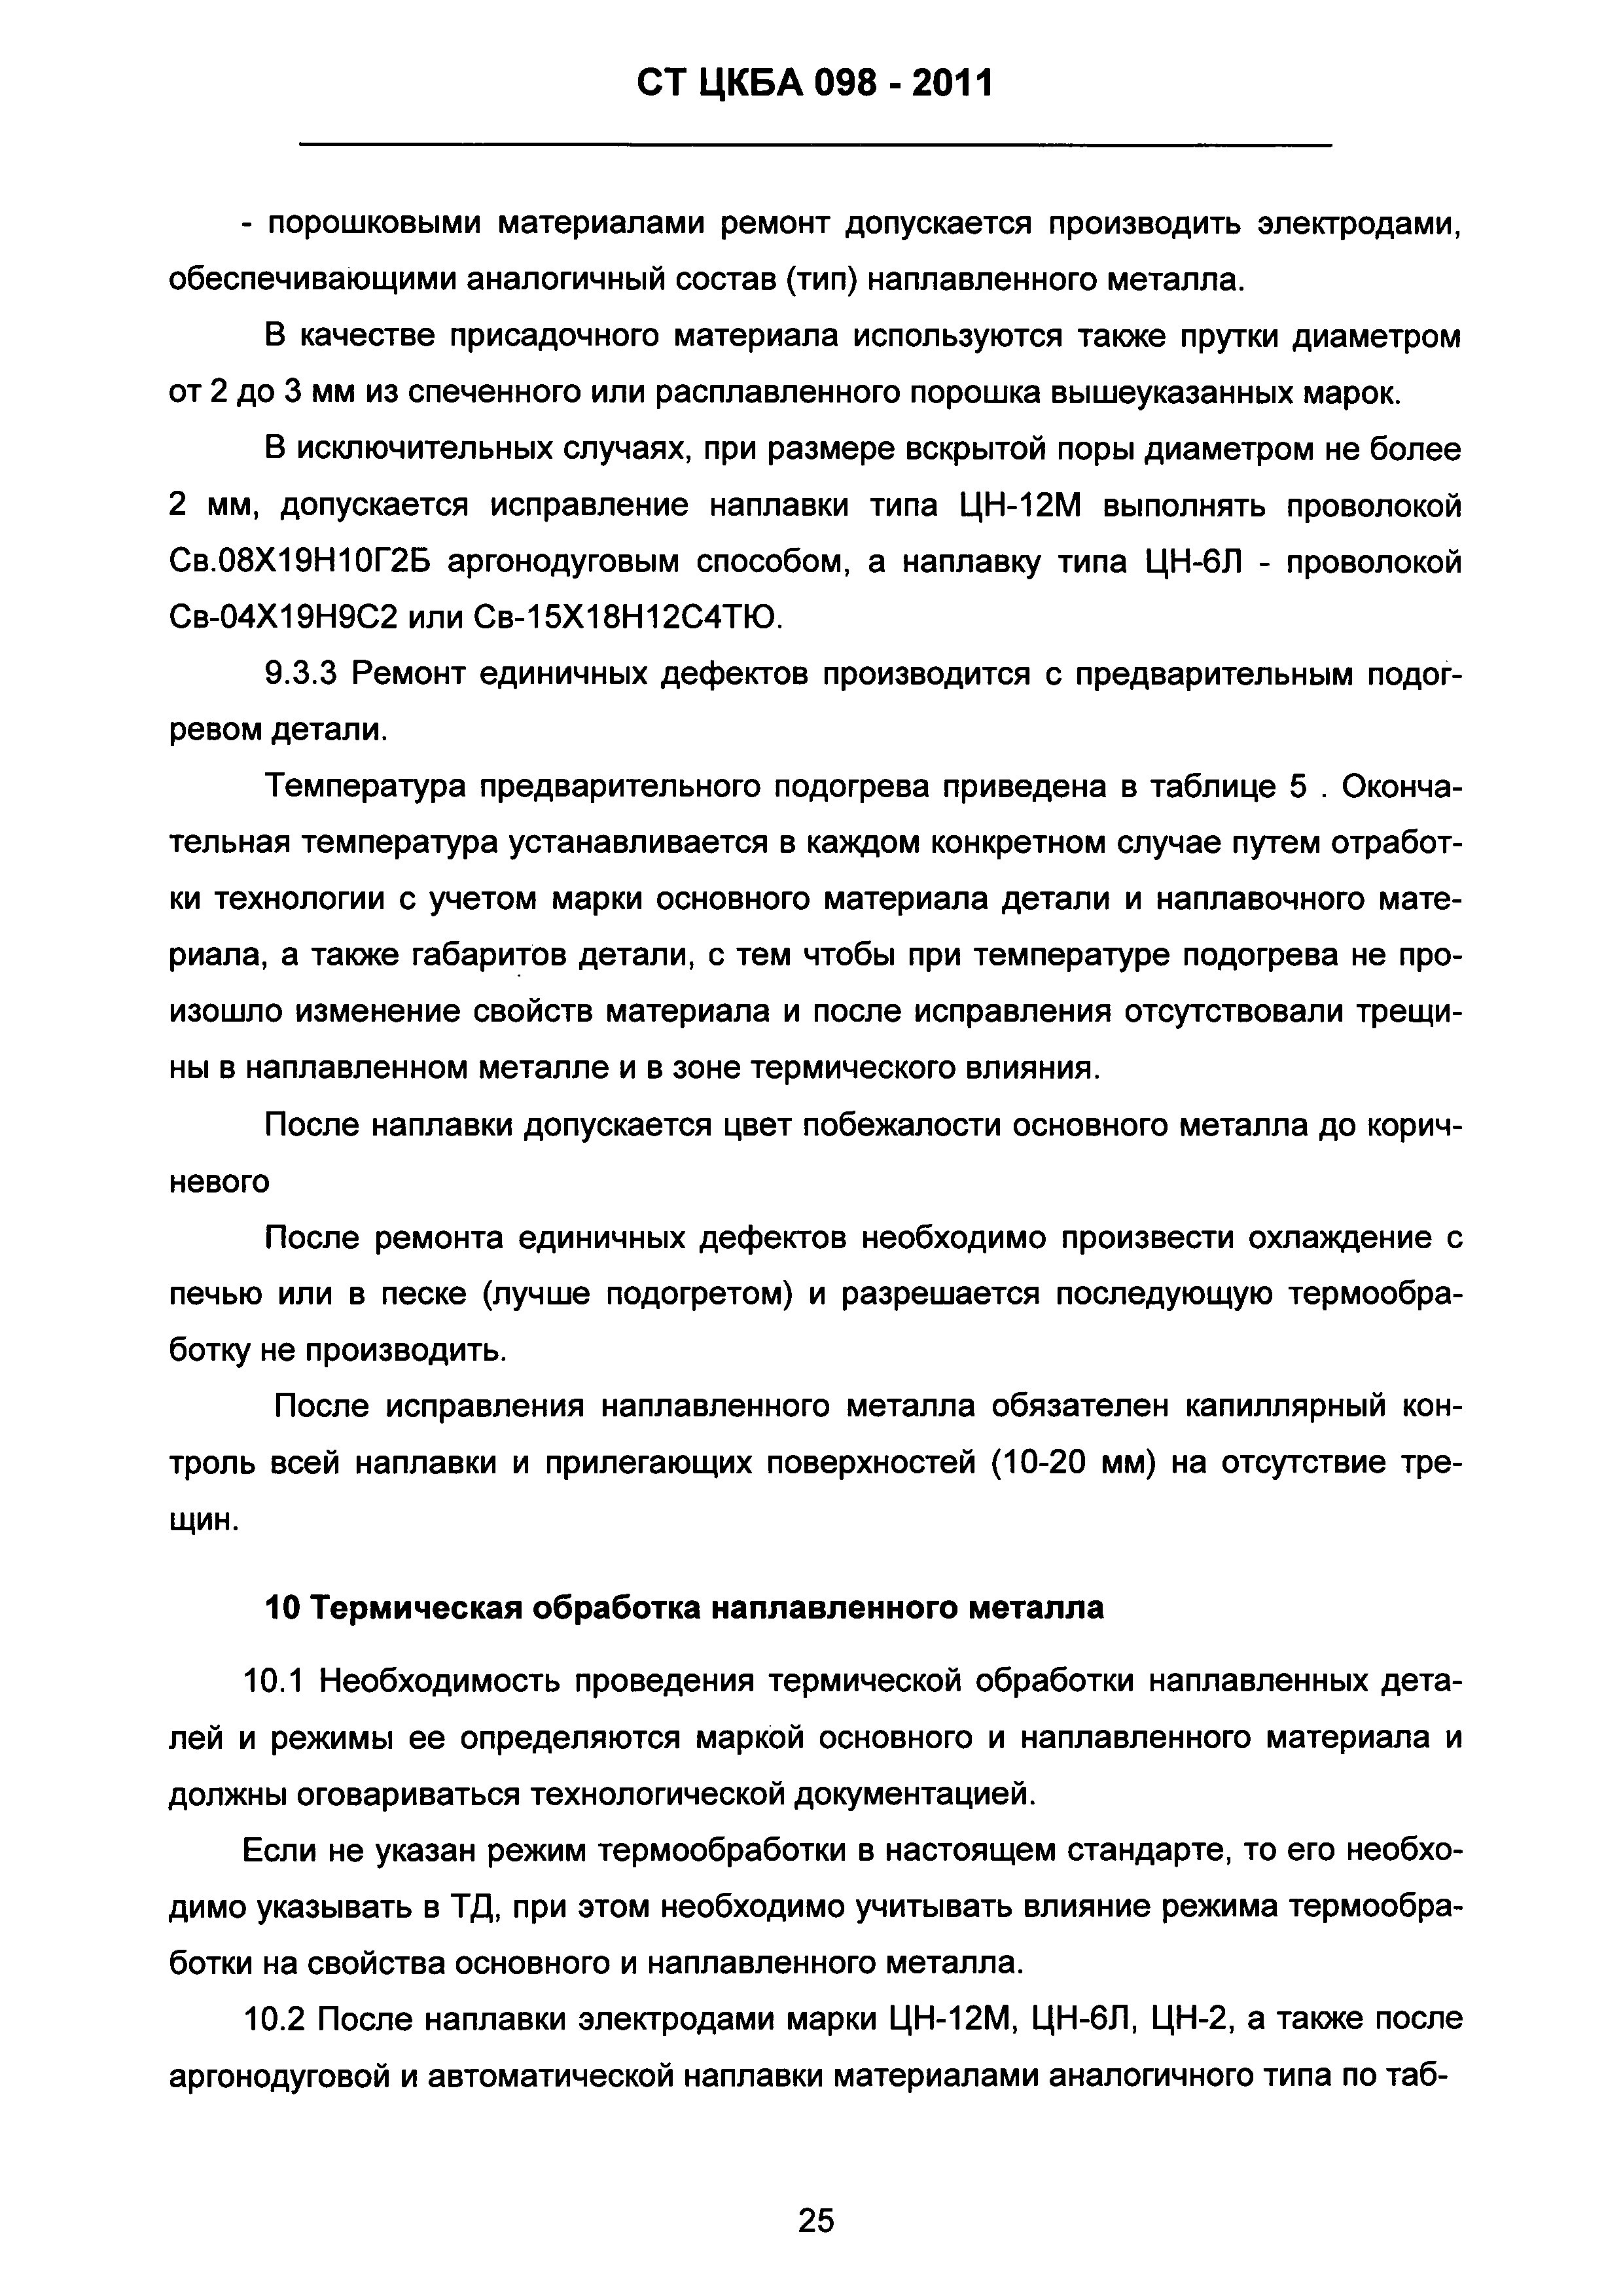 СТ ЦКБА 098-2011